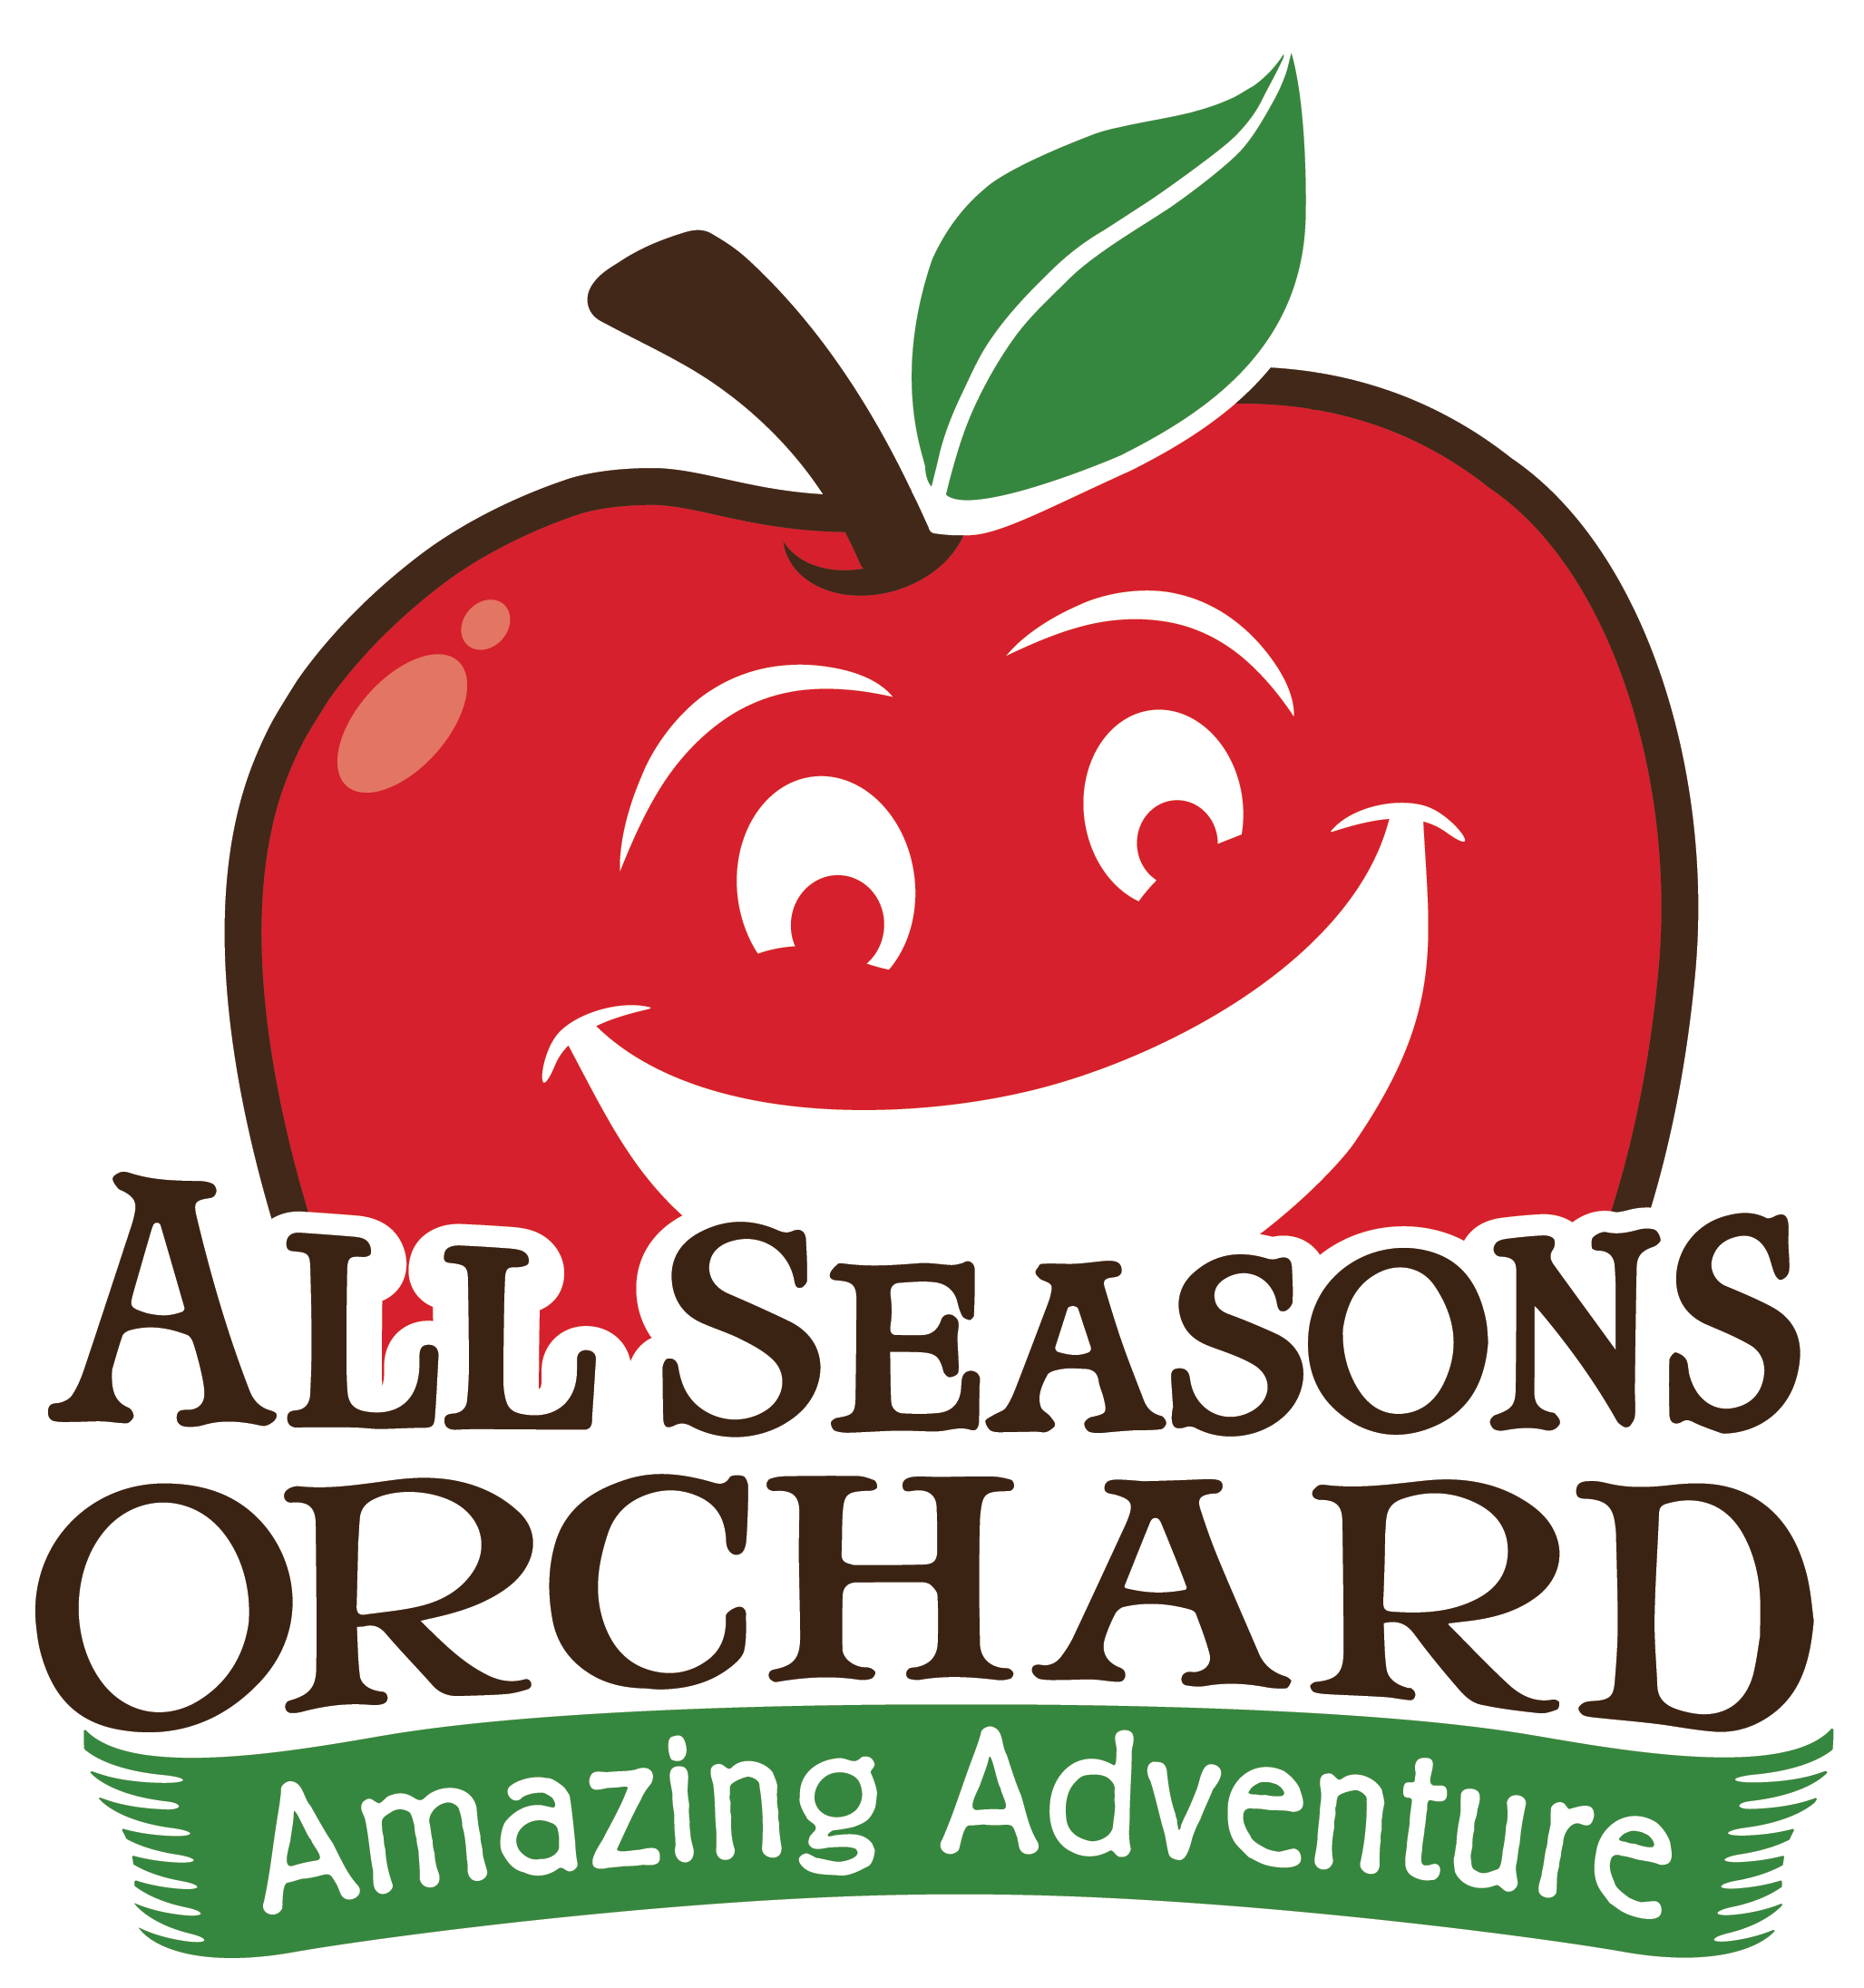 All Seasons Orchard  30 Years of Fall Family Fun